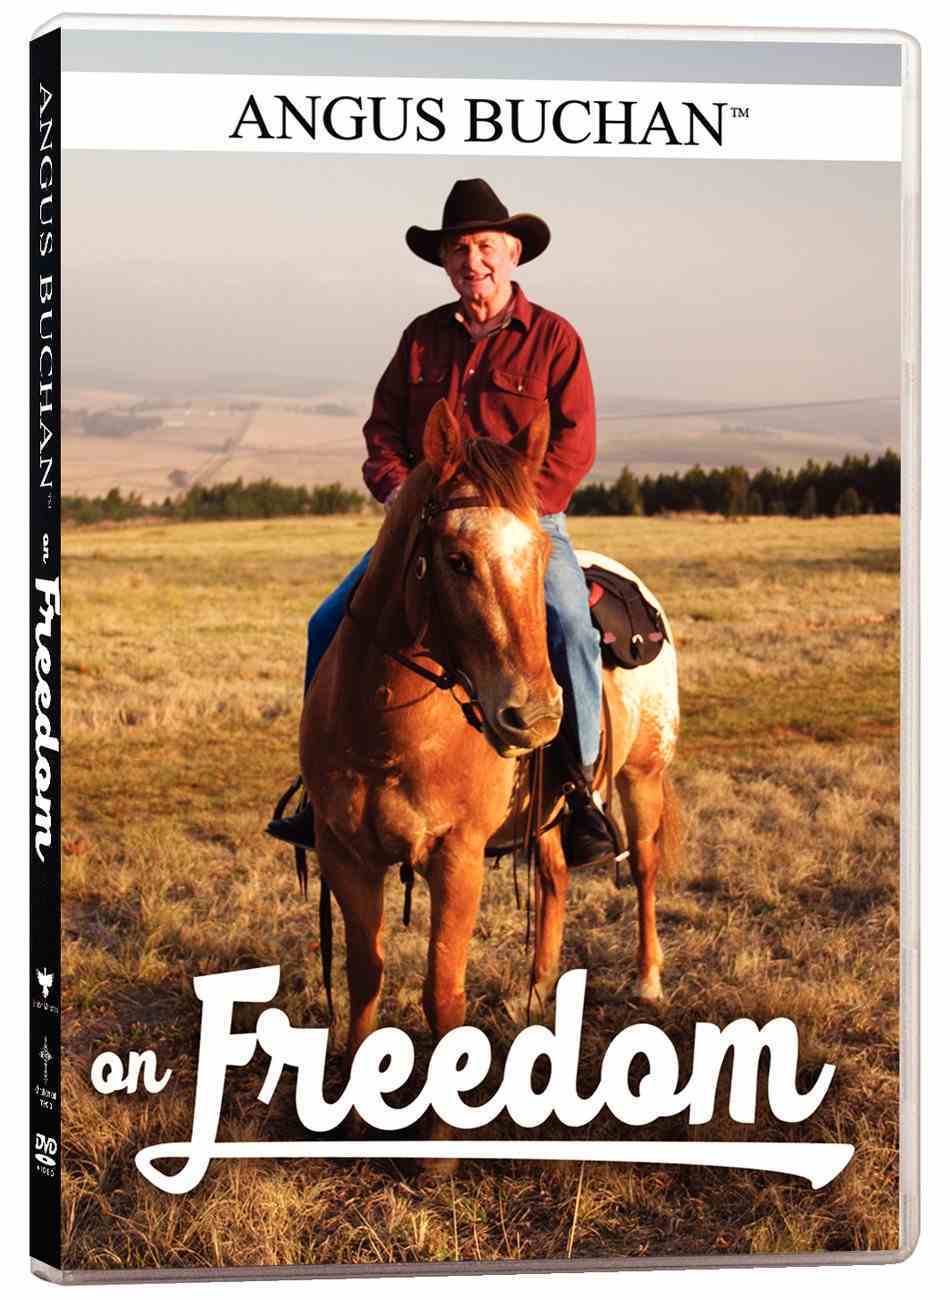 Angus Buchan on Freedom DVD